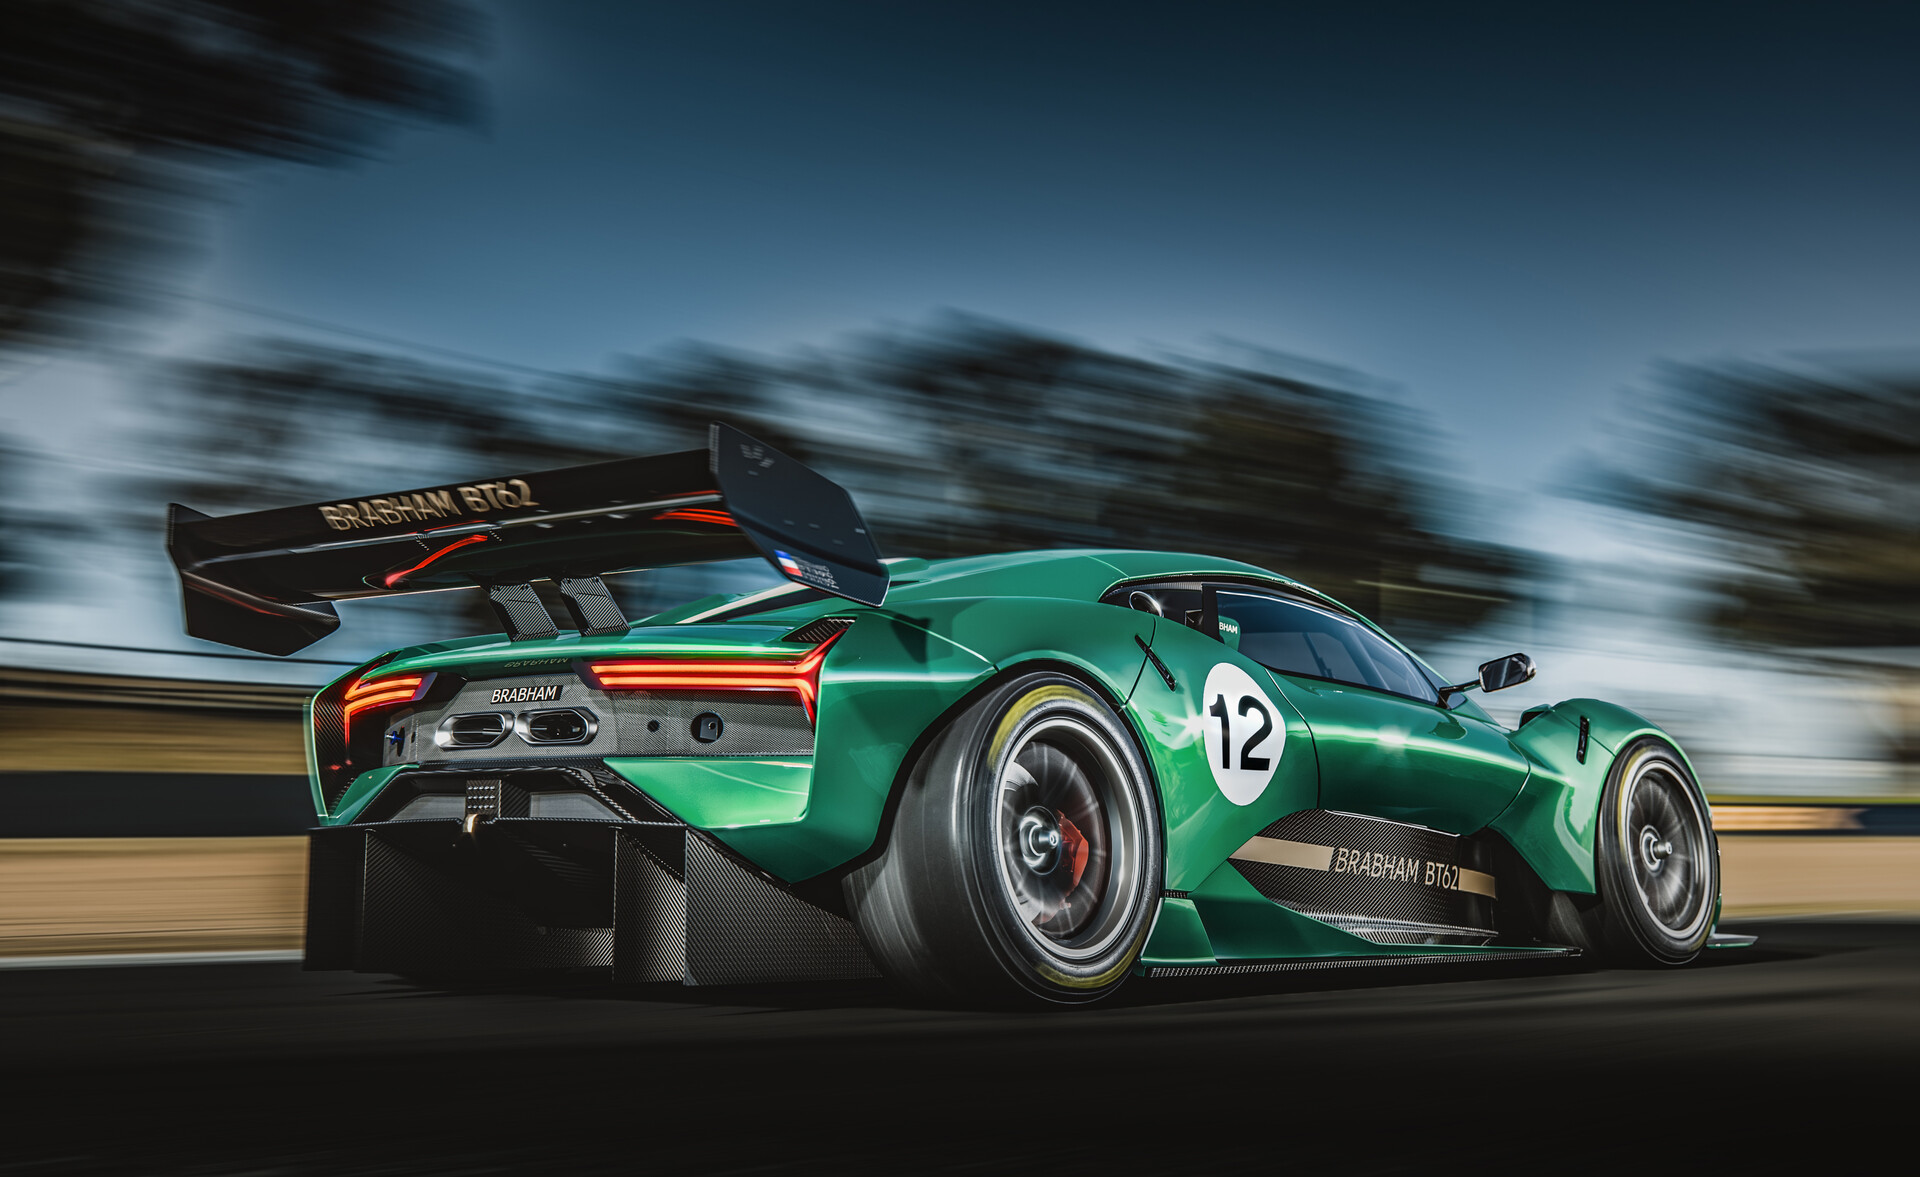 Auto racing desktop wallpapers hd auto racing backgrounds free images download